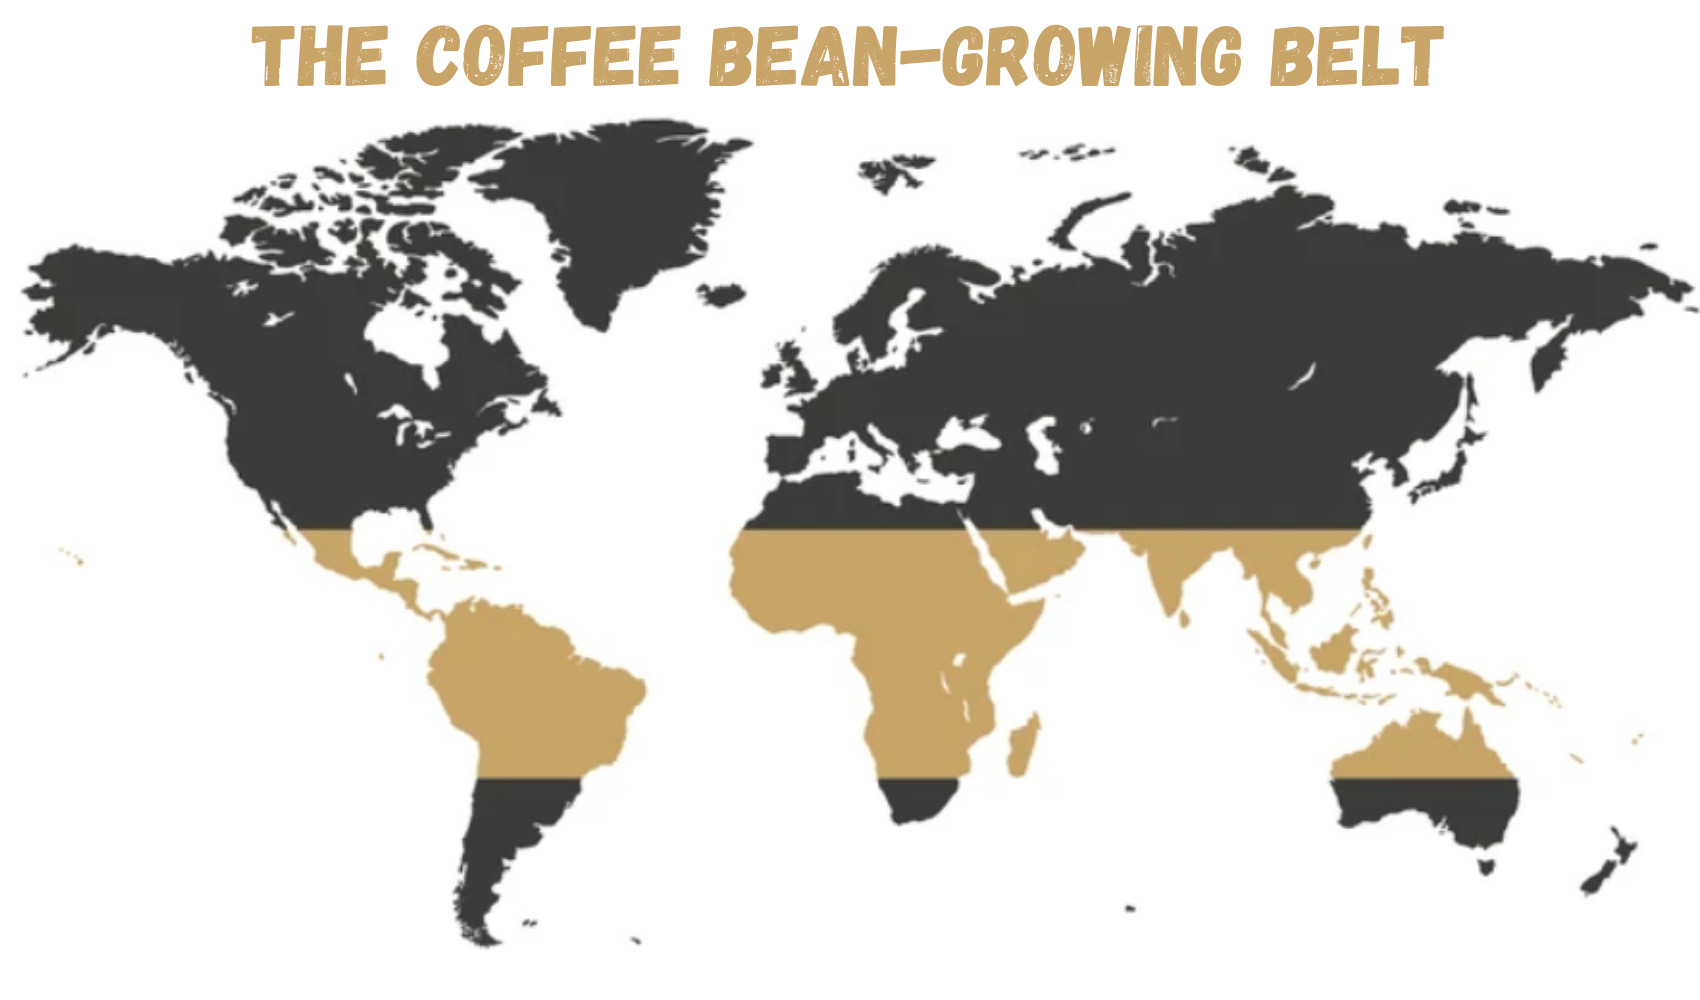 The Coffee Bean-Growing Belt